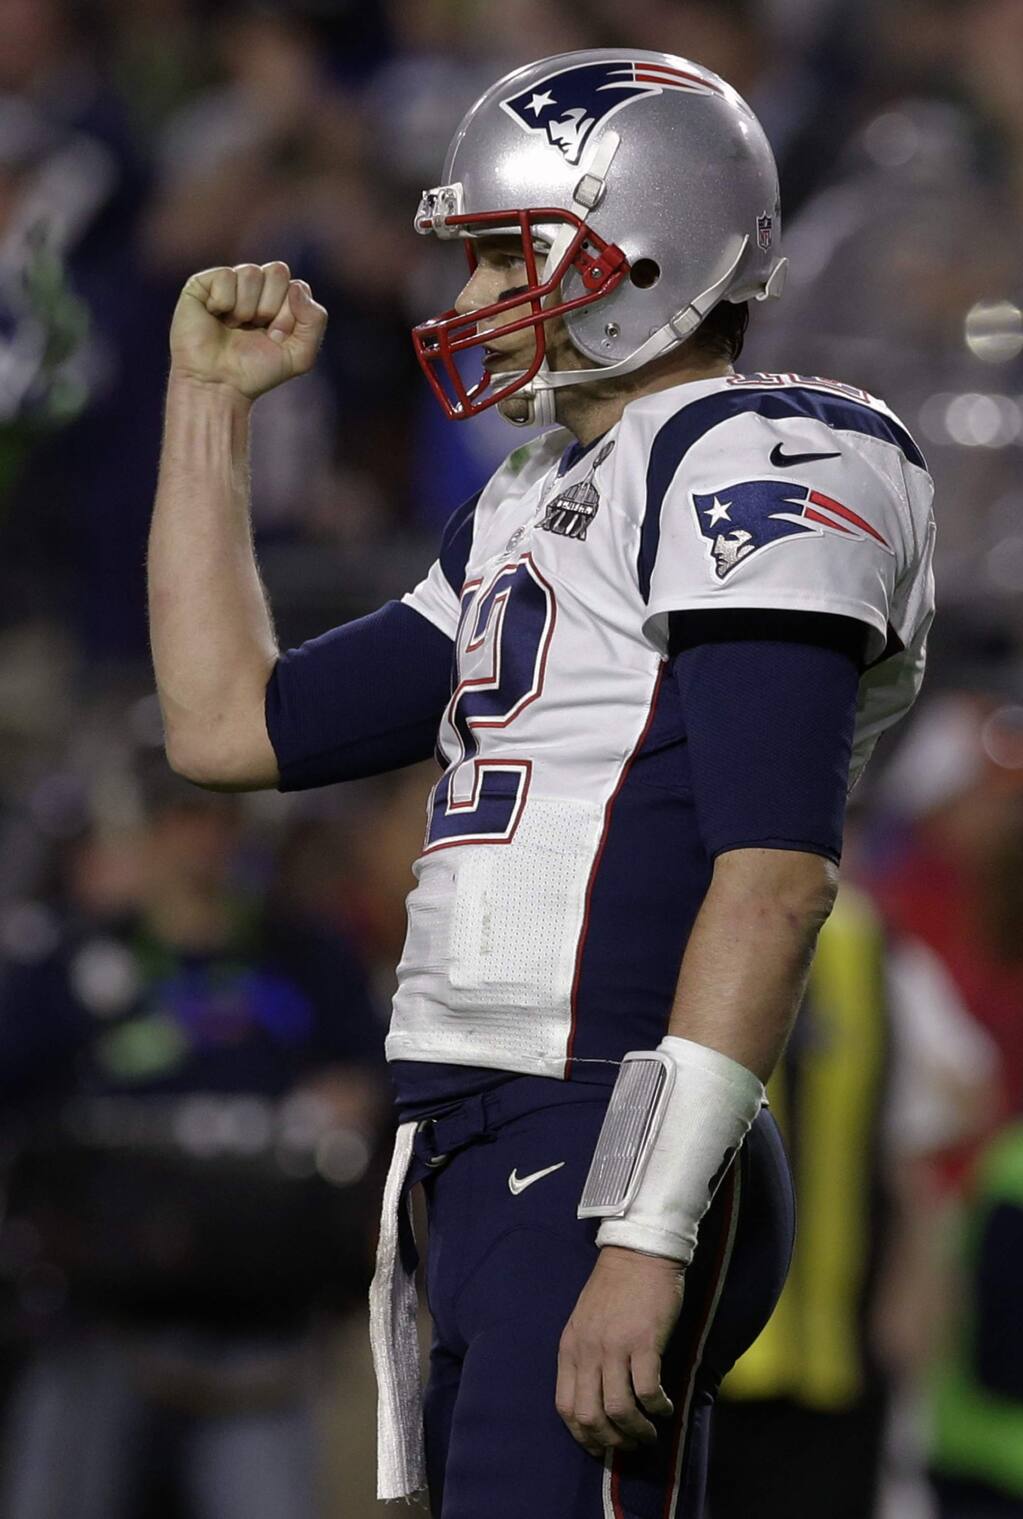 New England Patriots QB Tom Brady MVP of Super Bowl XLIX